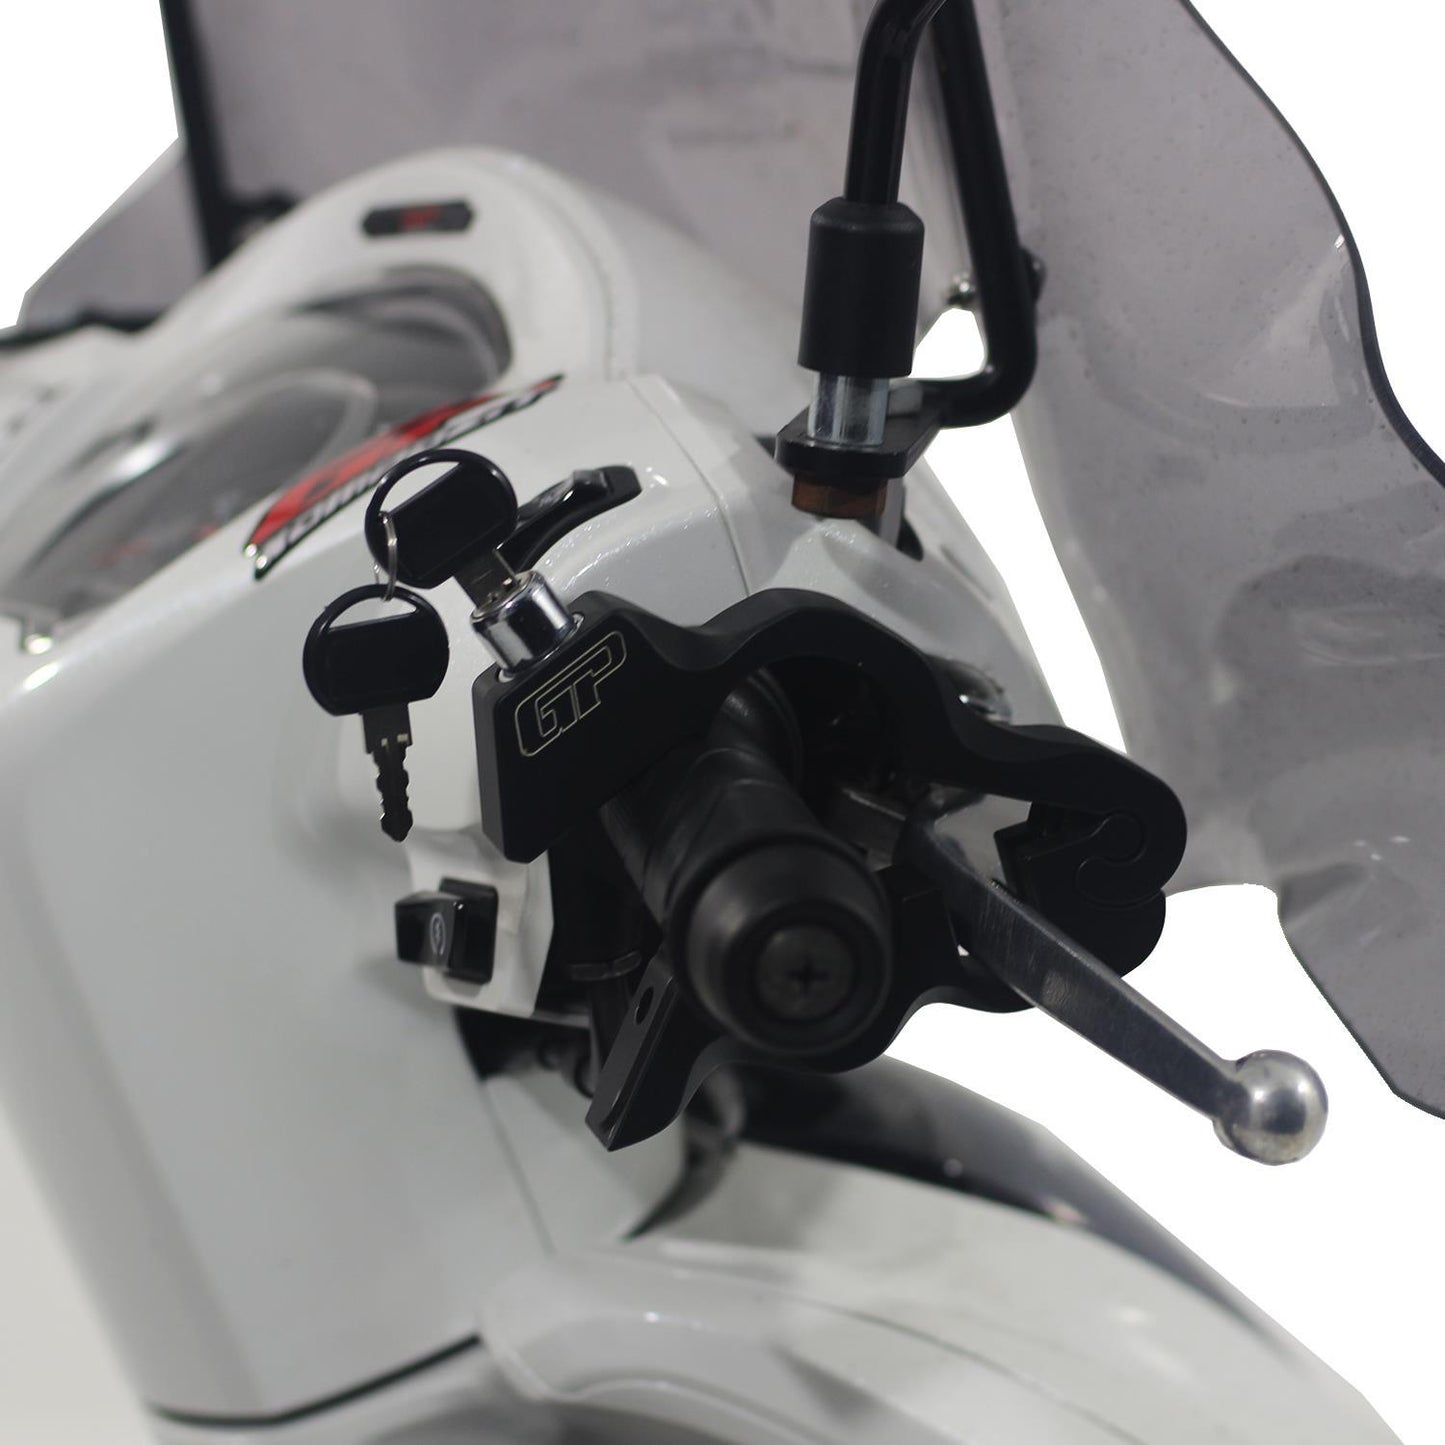 Universal front brake lever lock CNC on handlebar to bleed brakes/stop bike